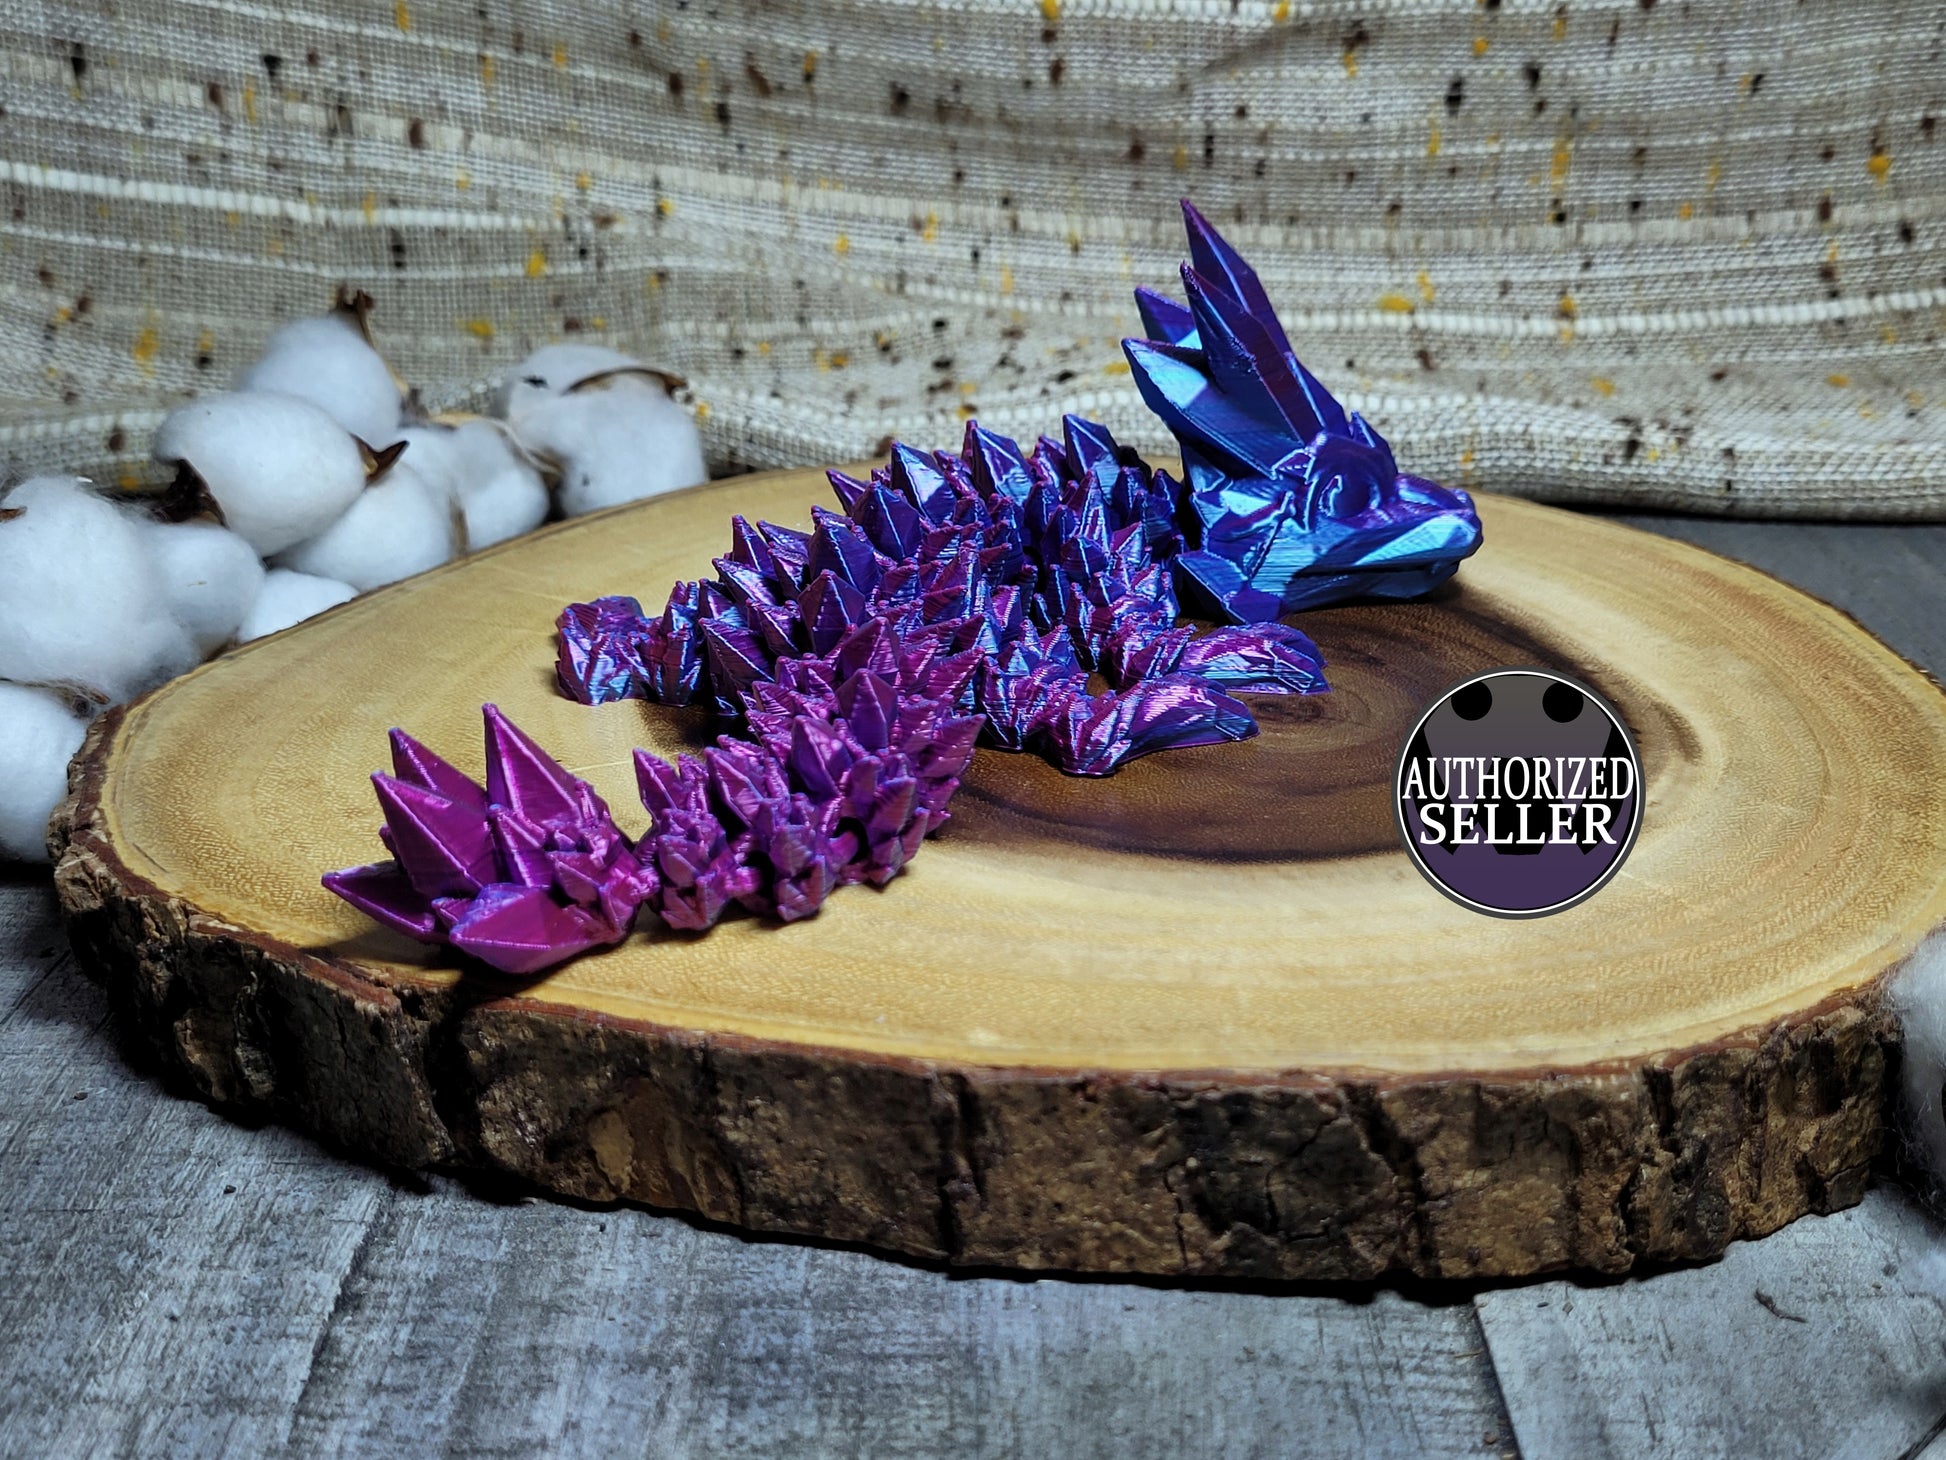 Crystal Dragon 3D Printed Articulated Fidget Toy Tik Tok tri